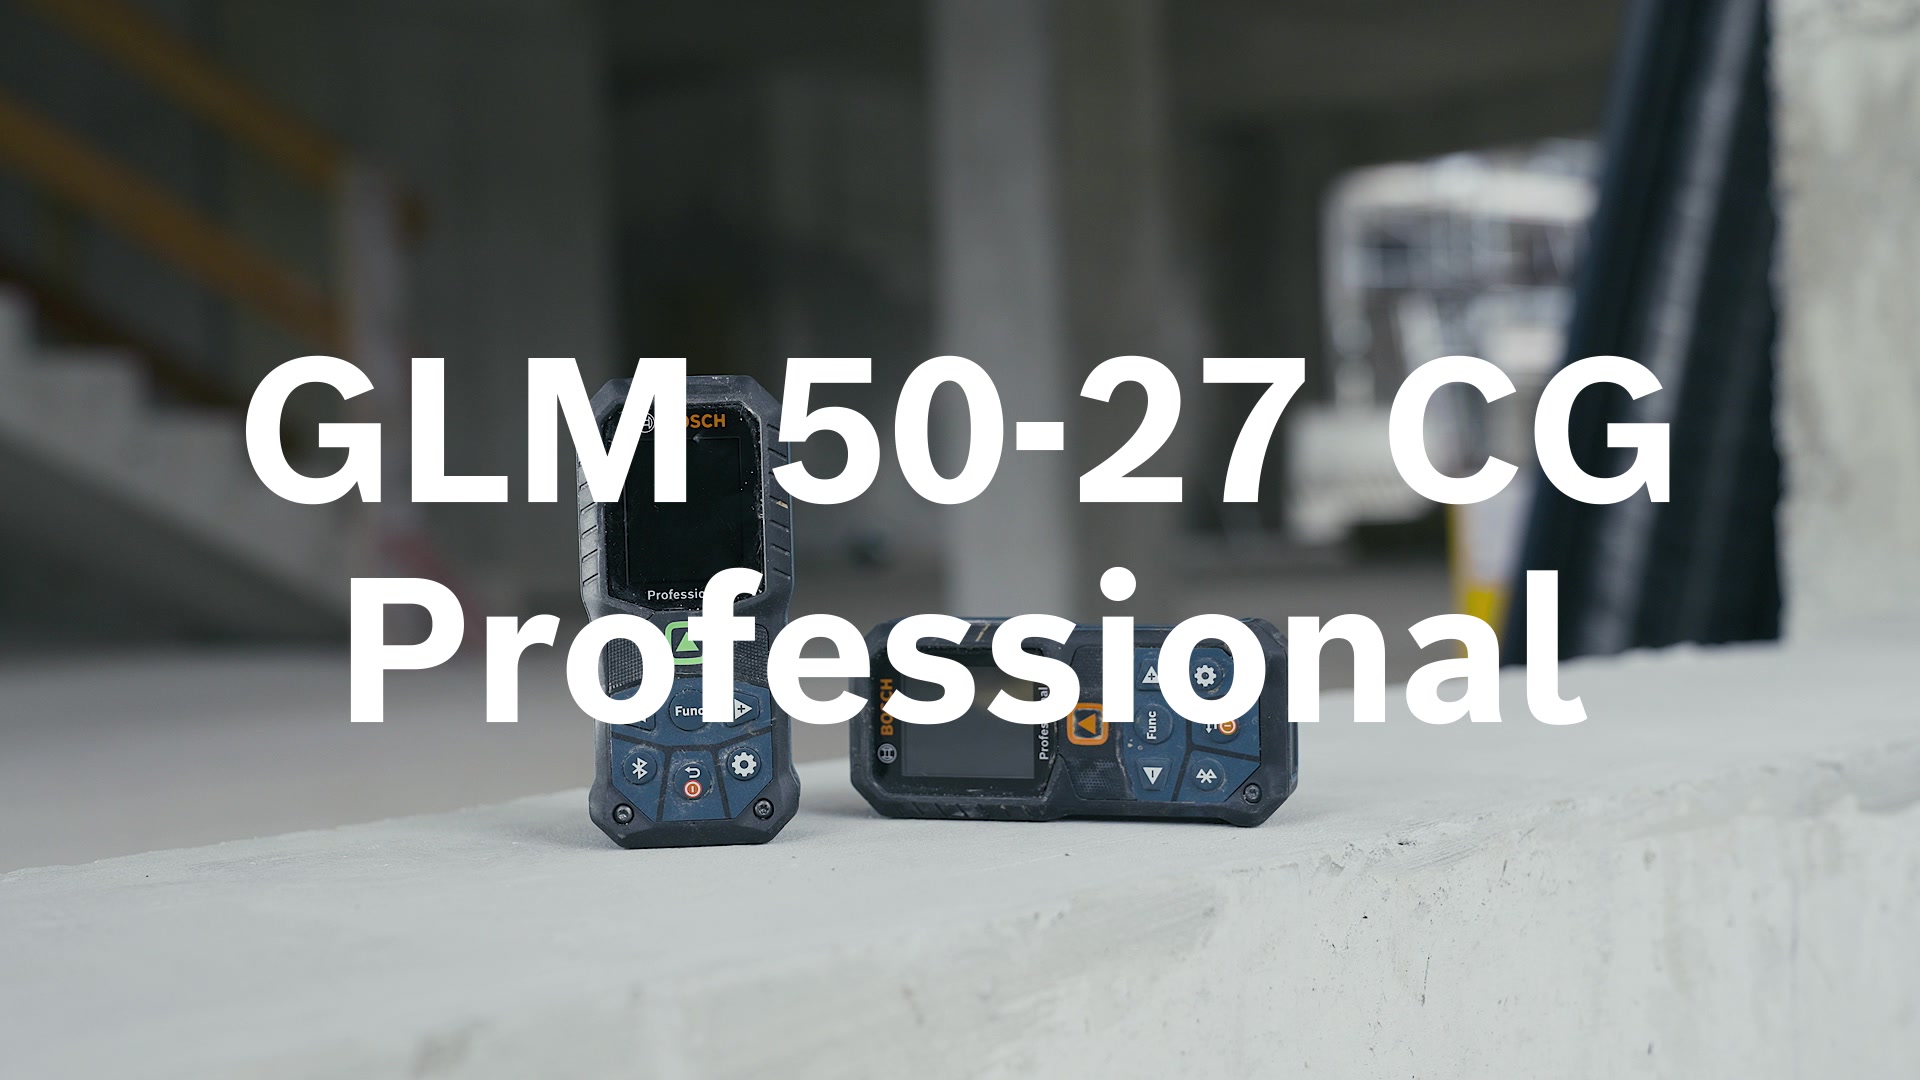 GLM 50-27 C